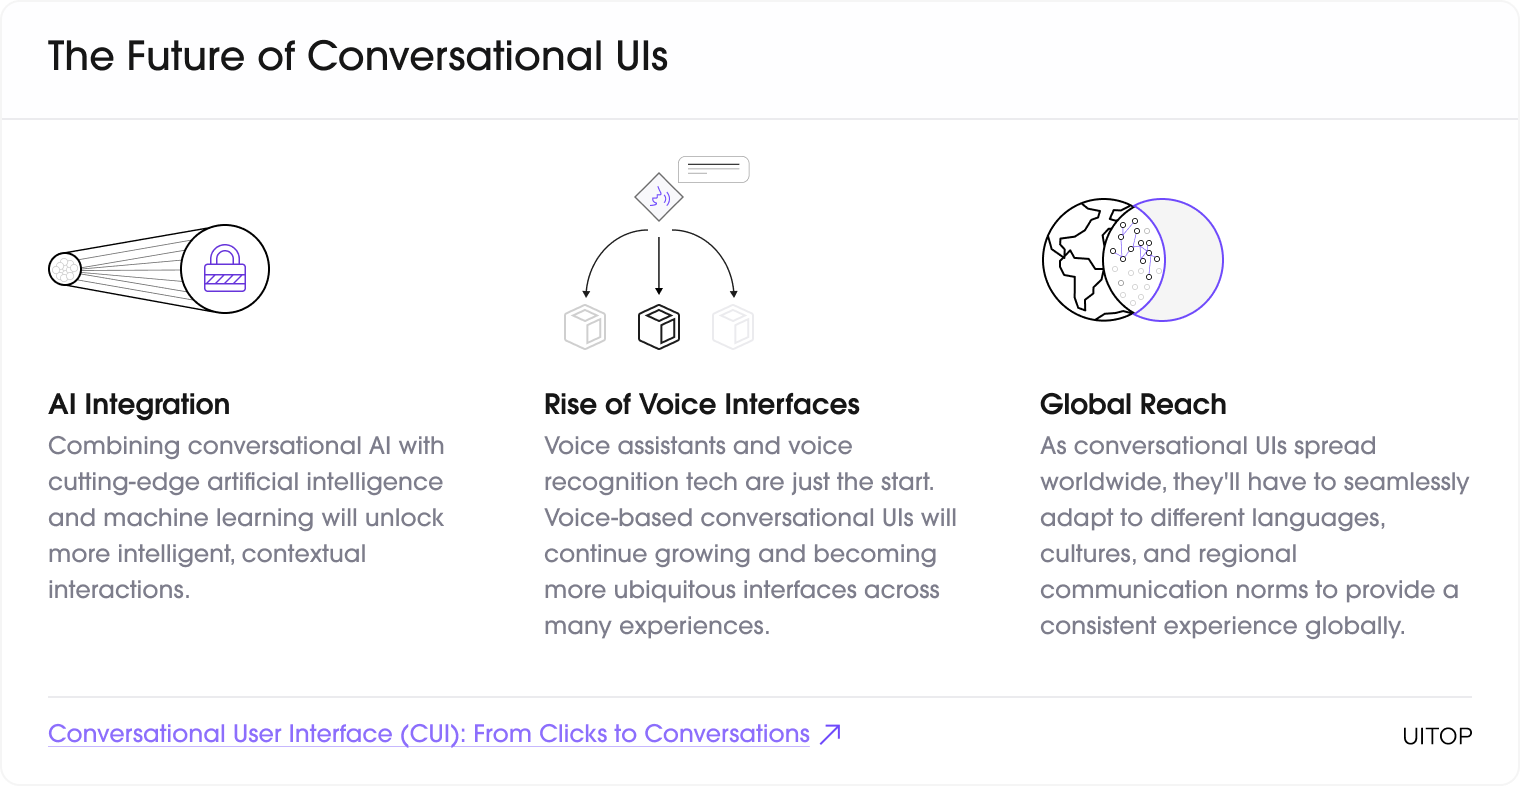 The Future of Conversational UI